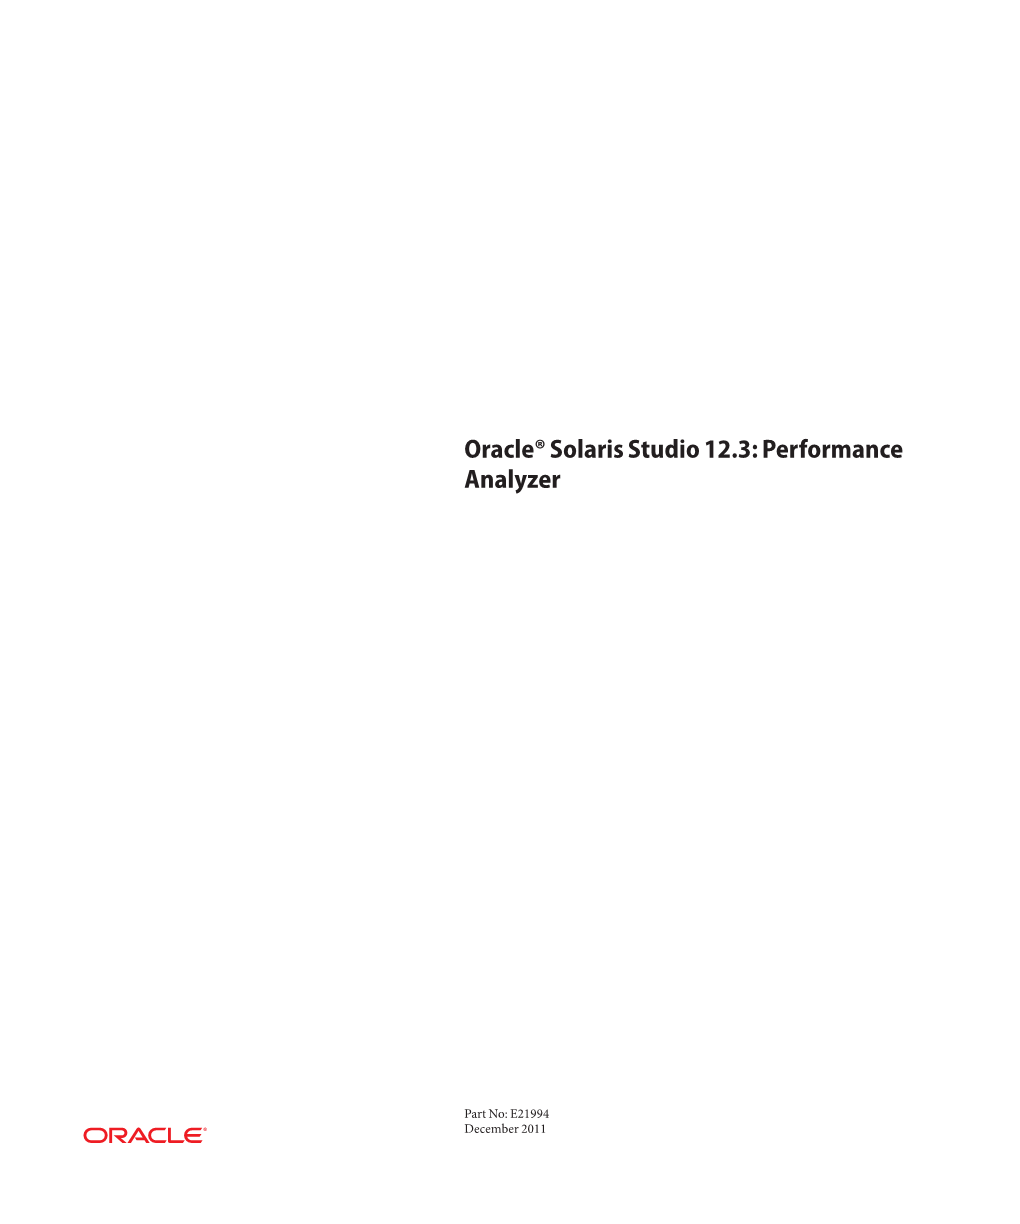 Oracle Solaris Studio 12.3 Performance Analyzer